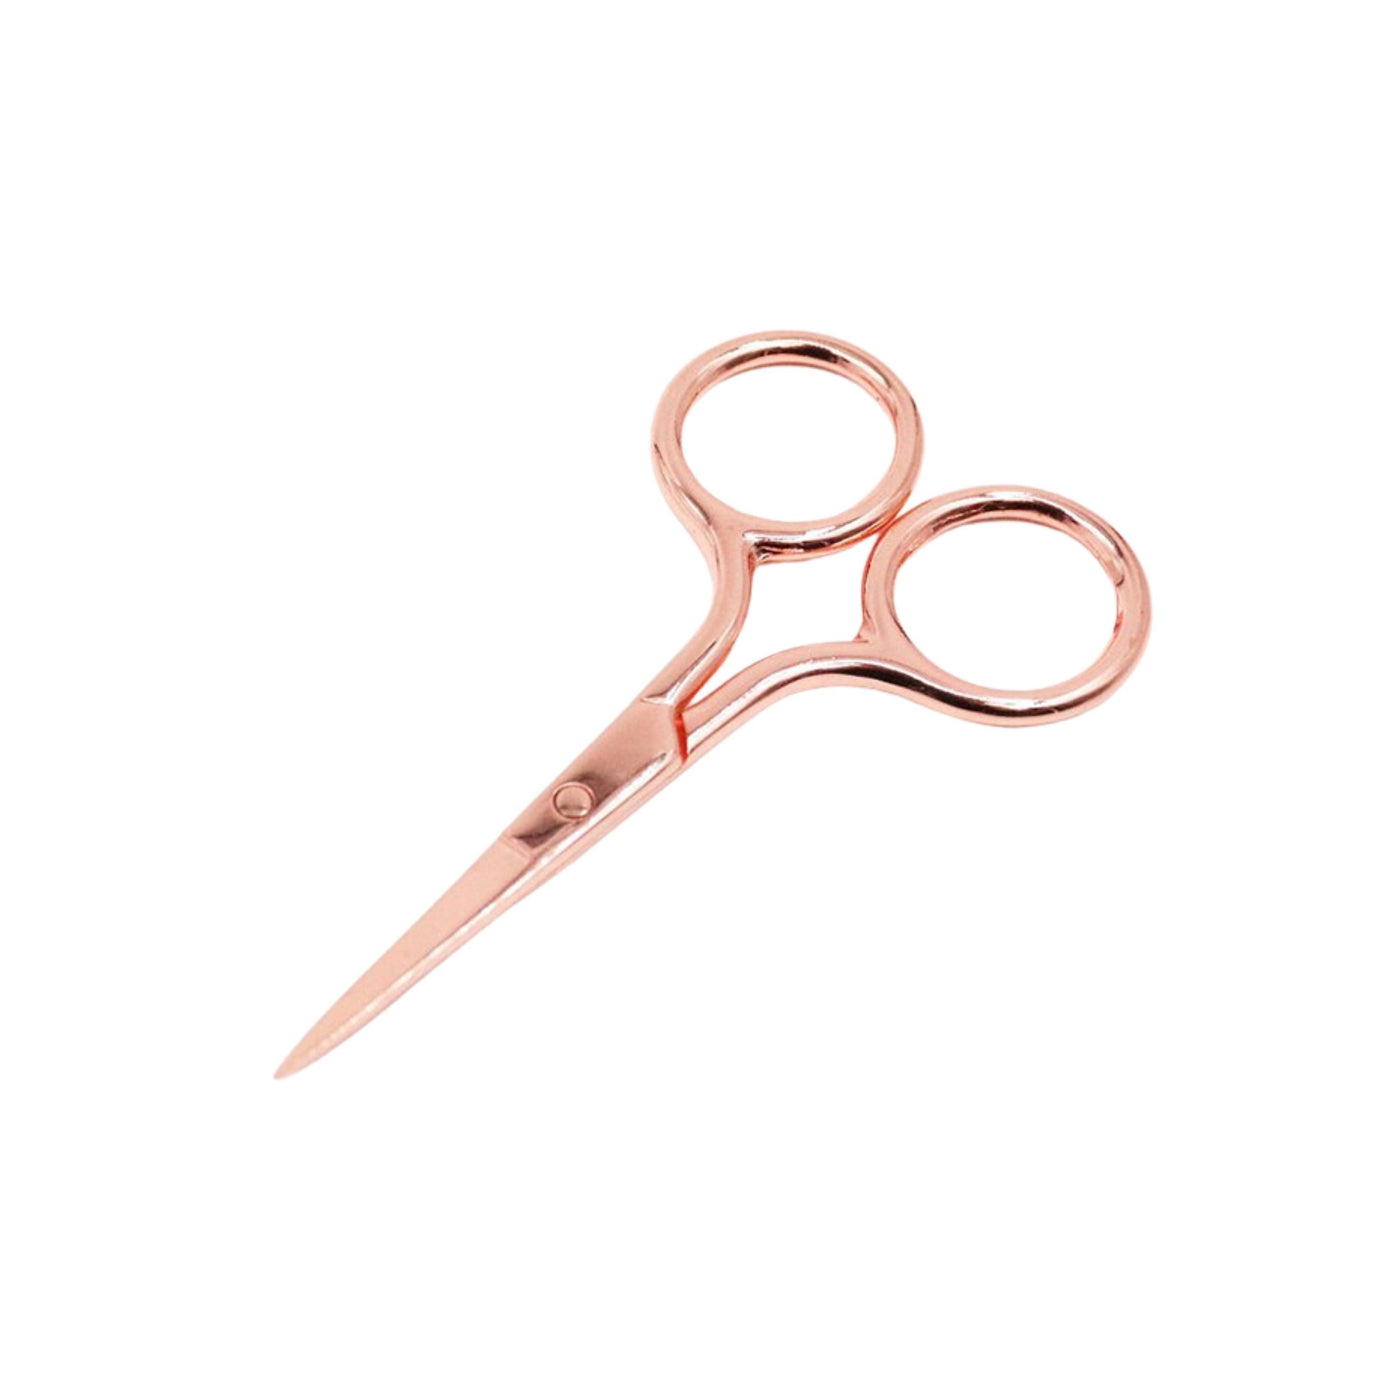 Precision Brow Scissors - Rose Gold - The London Brow Company